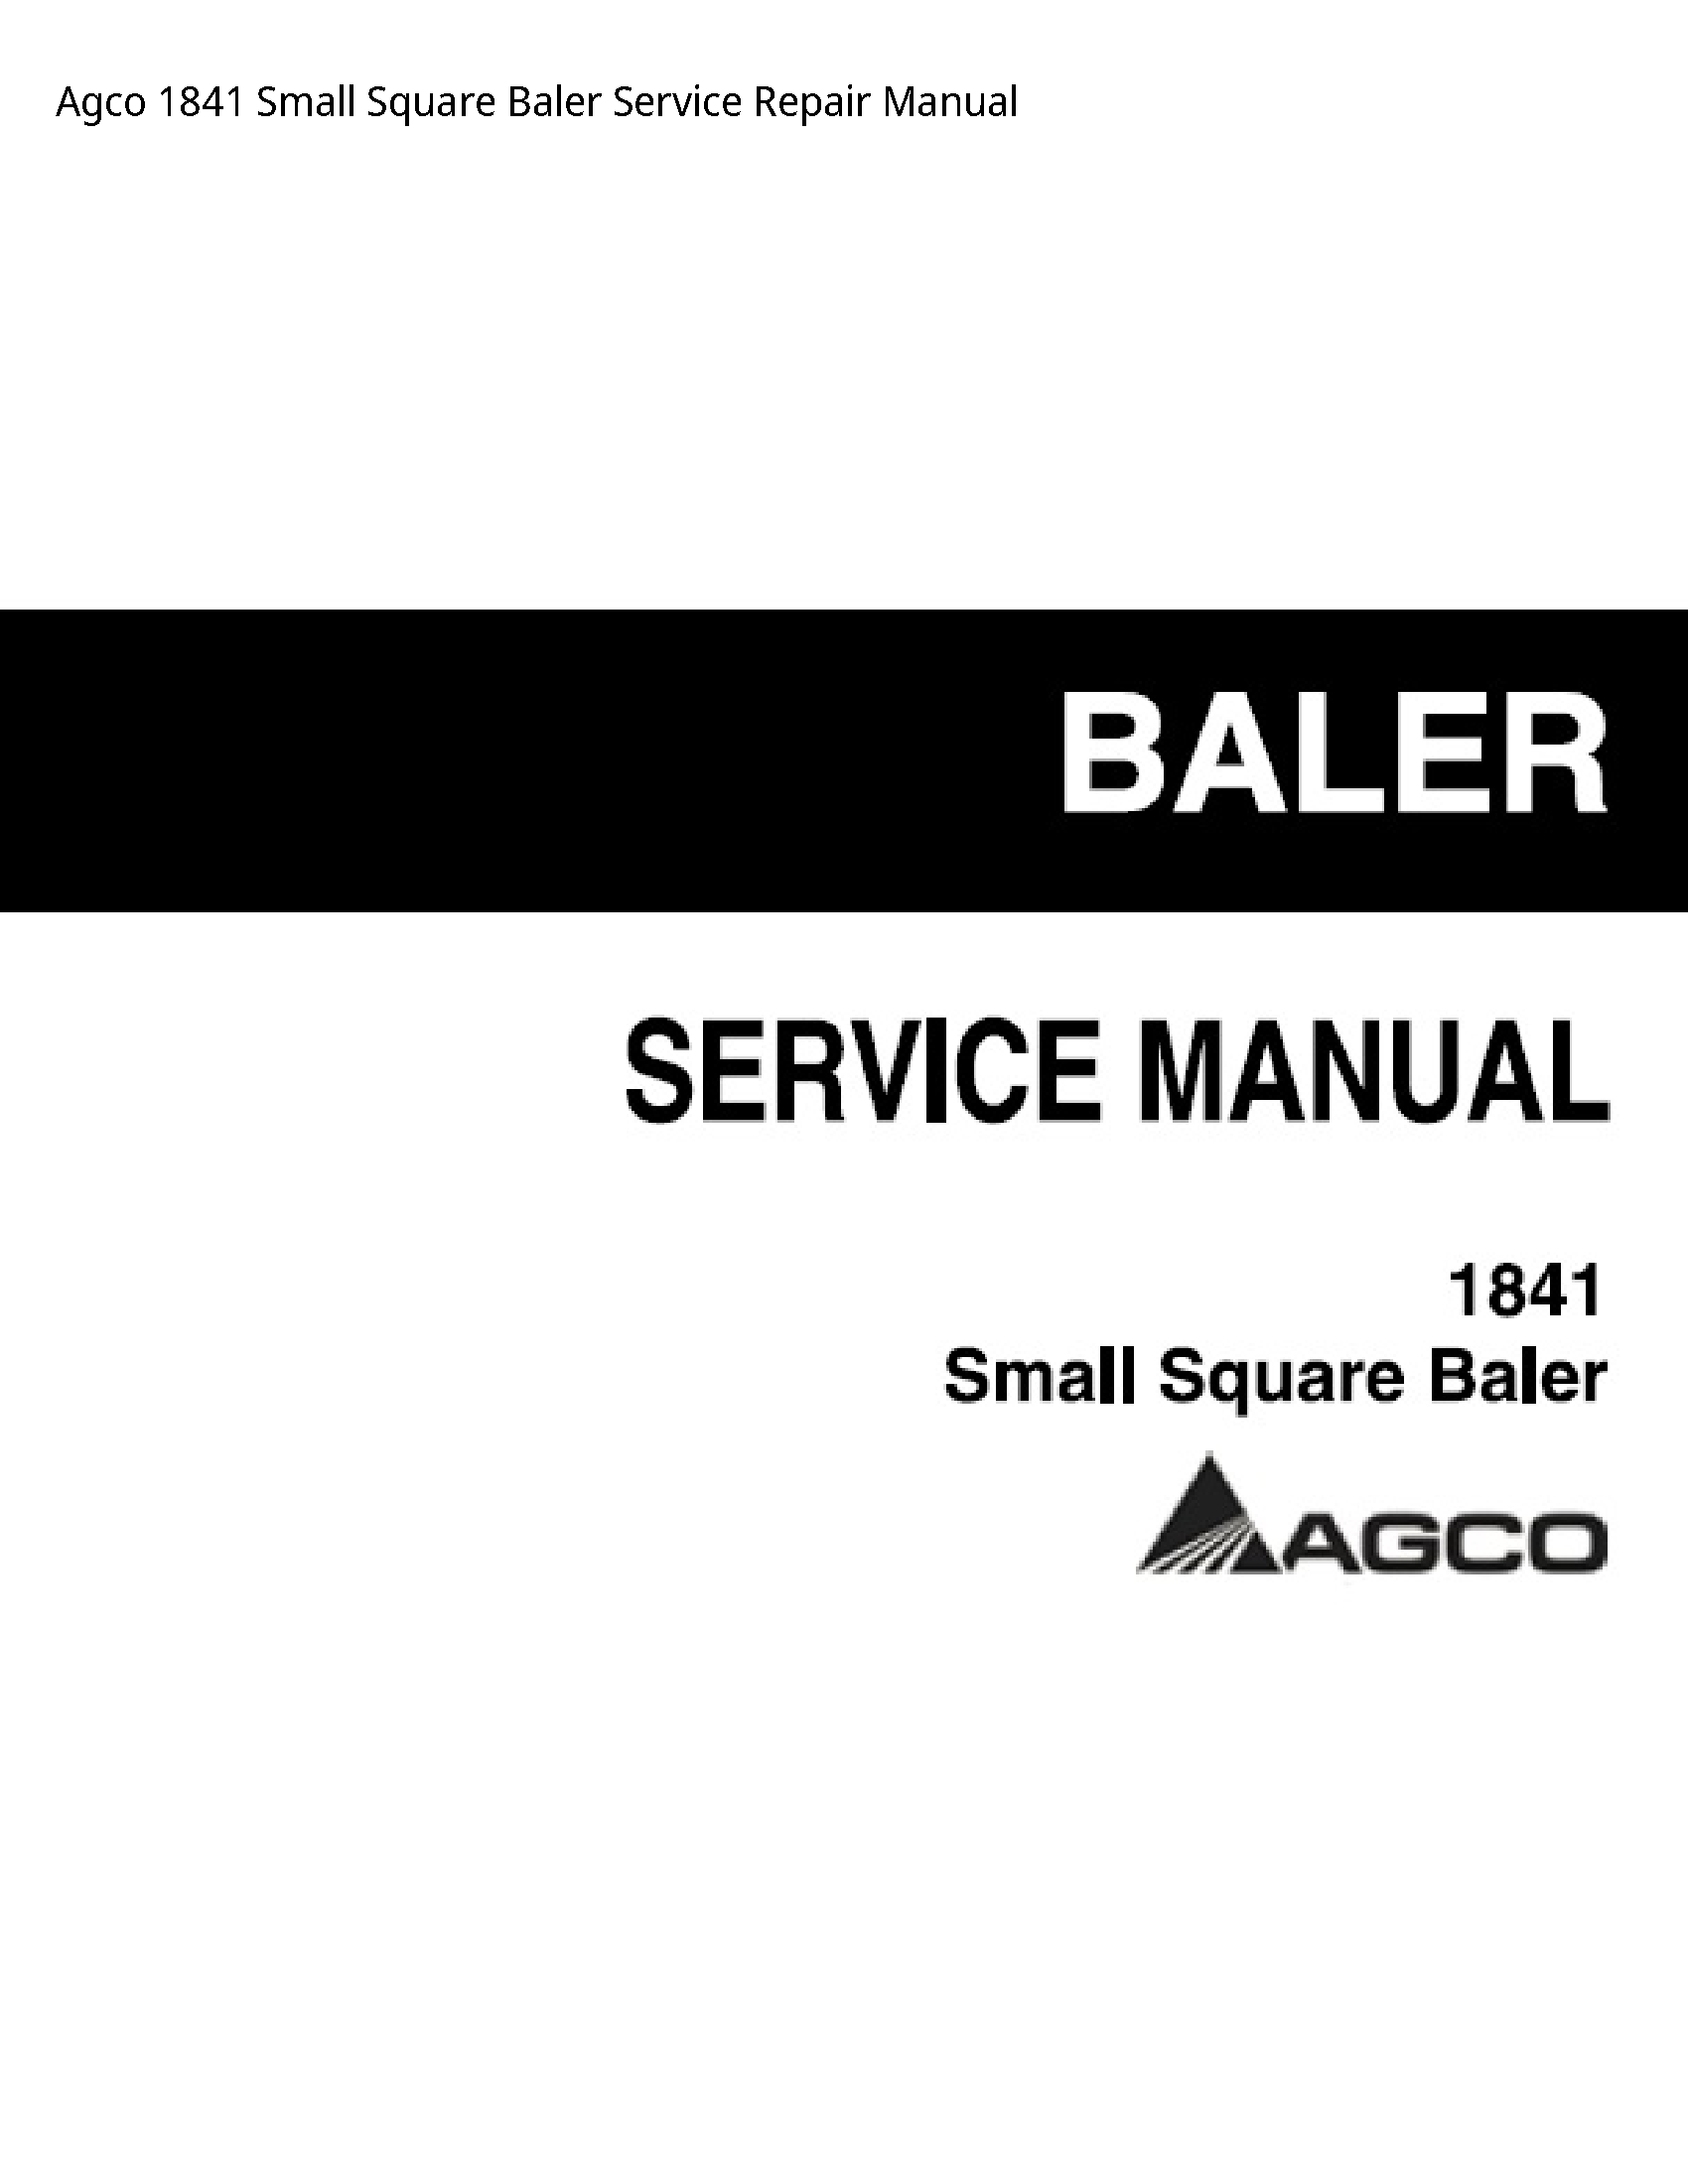 AGCO 1841 Small Square Baler manual